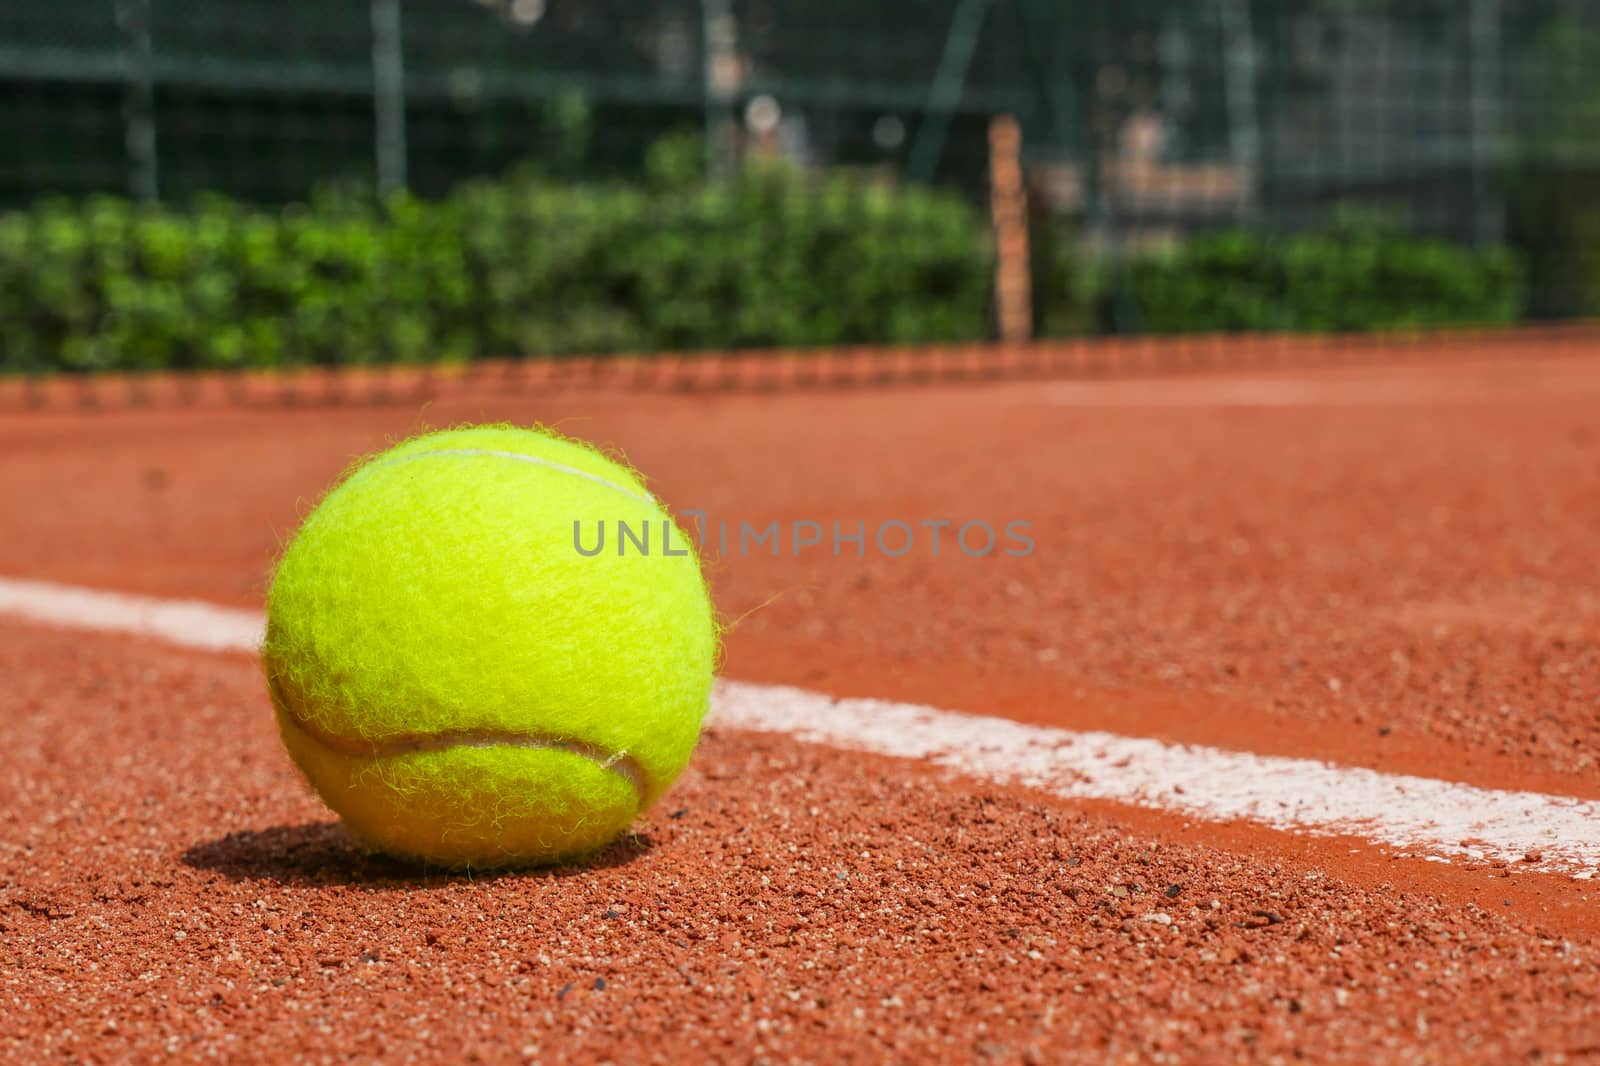 Tennis equipment on clay court, Paris, France